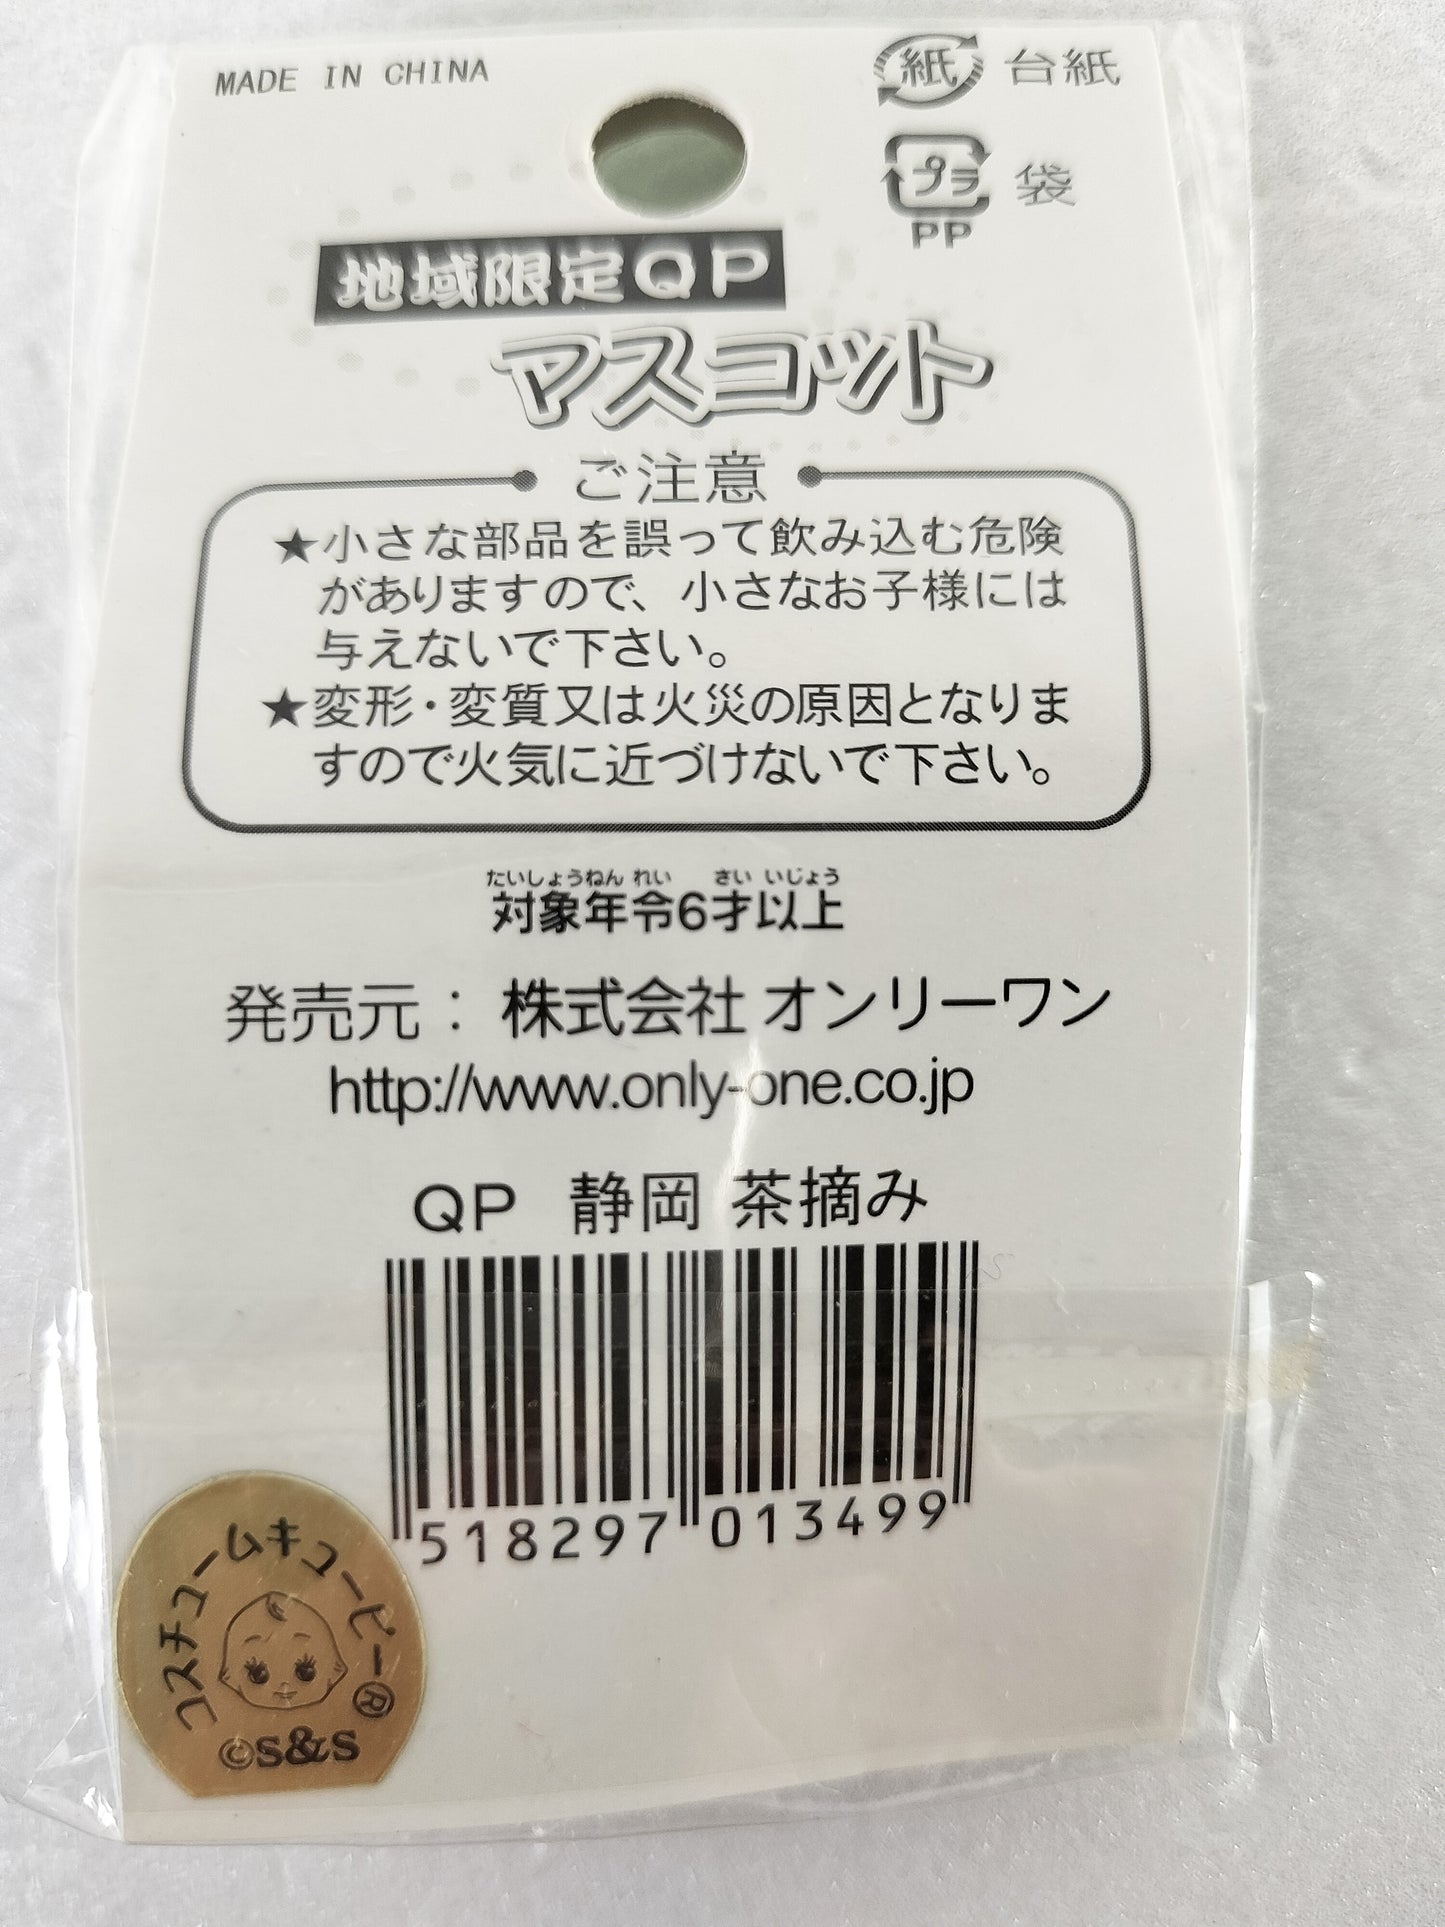 Kewpie Strap Shizuoka Prefecture version "Tea Picking Kewpie" vintage